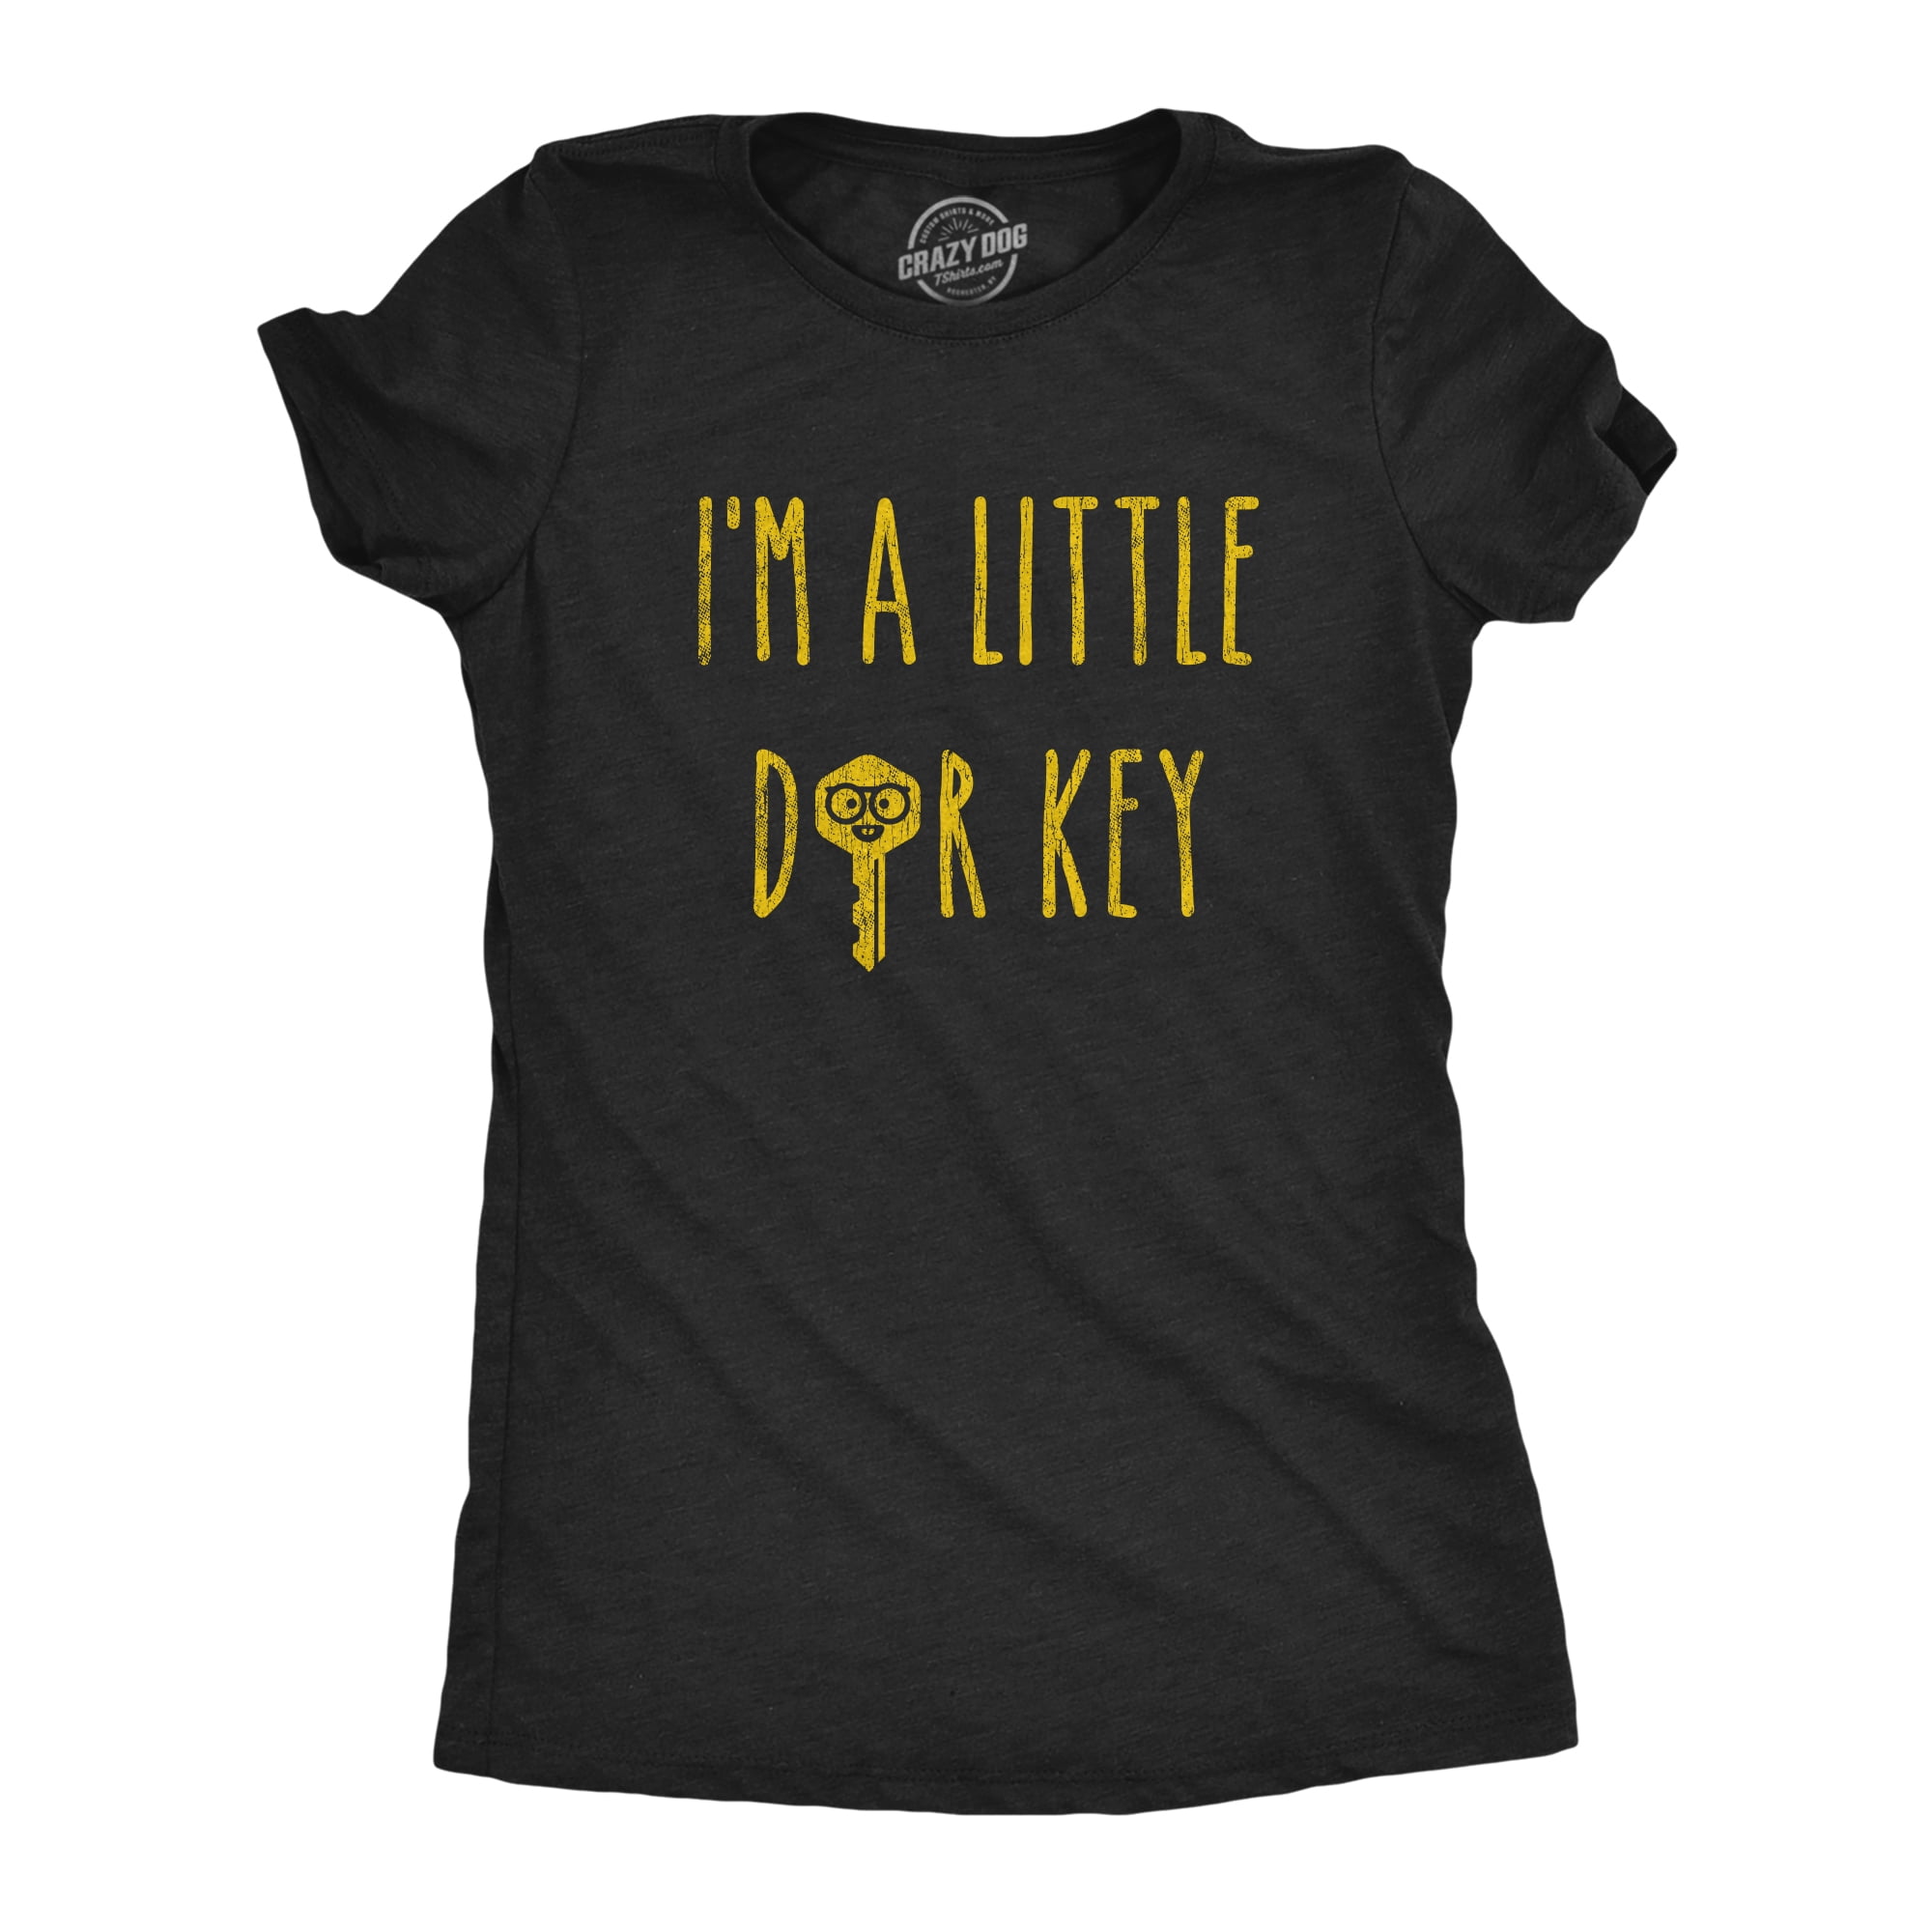 Womens Im A Little Door Key T Shirt Funny Dorky Humor Nerdy Graphic Novelty Tee Heather Black